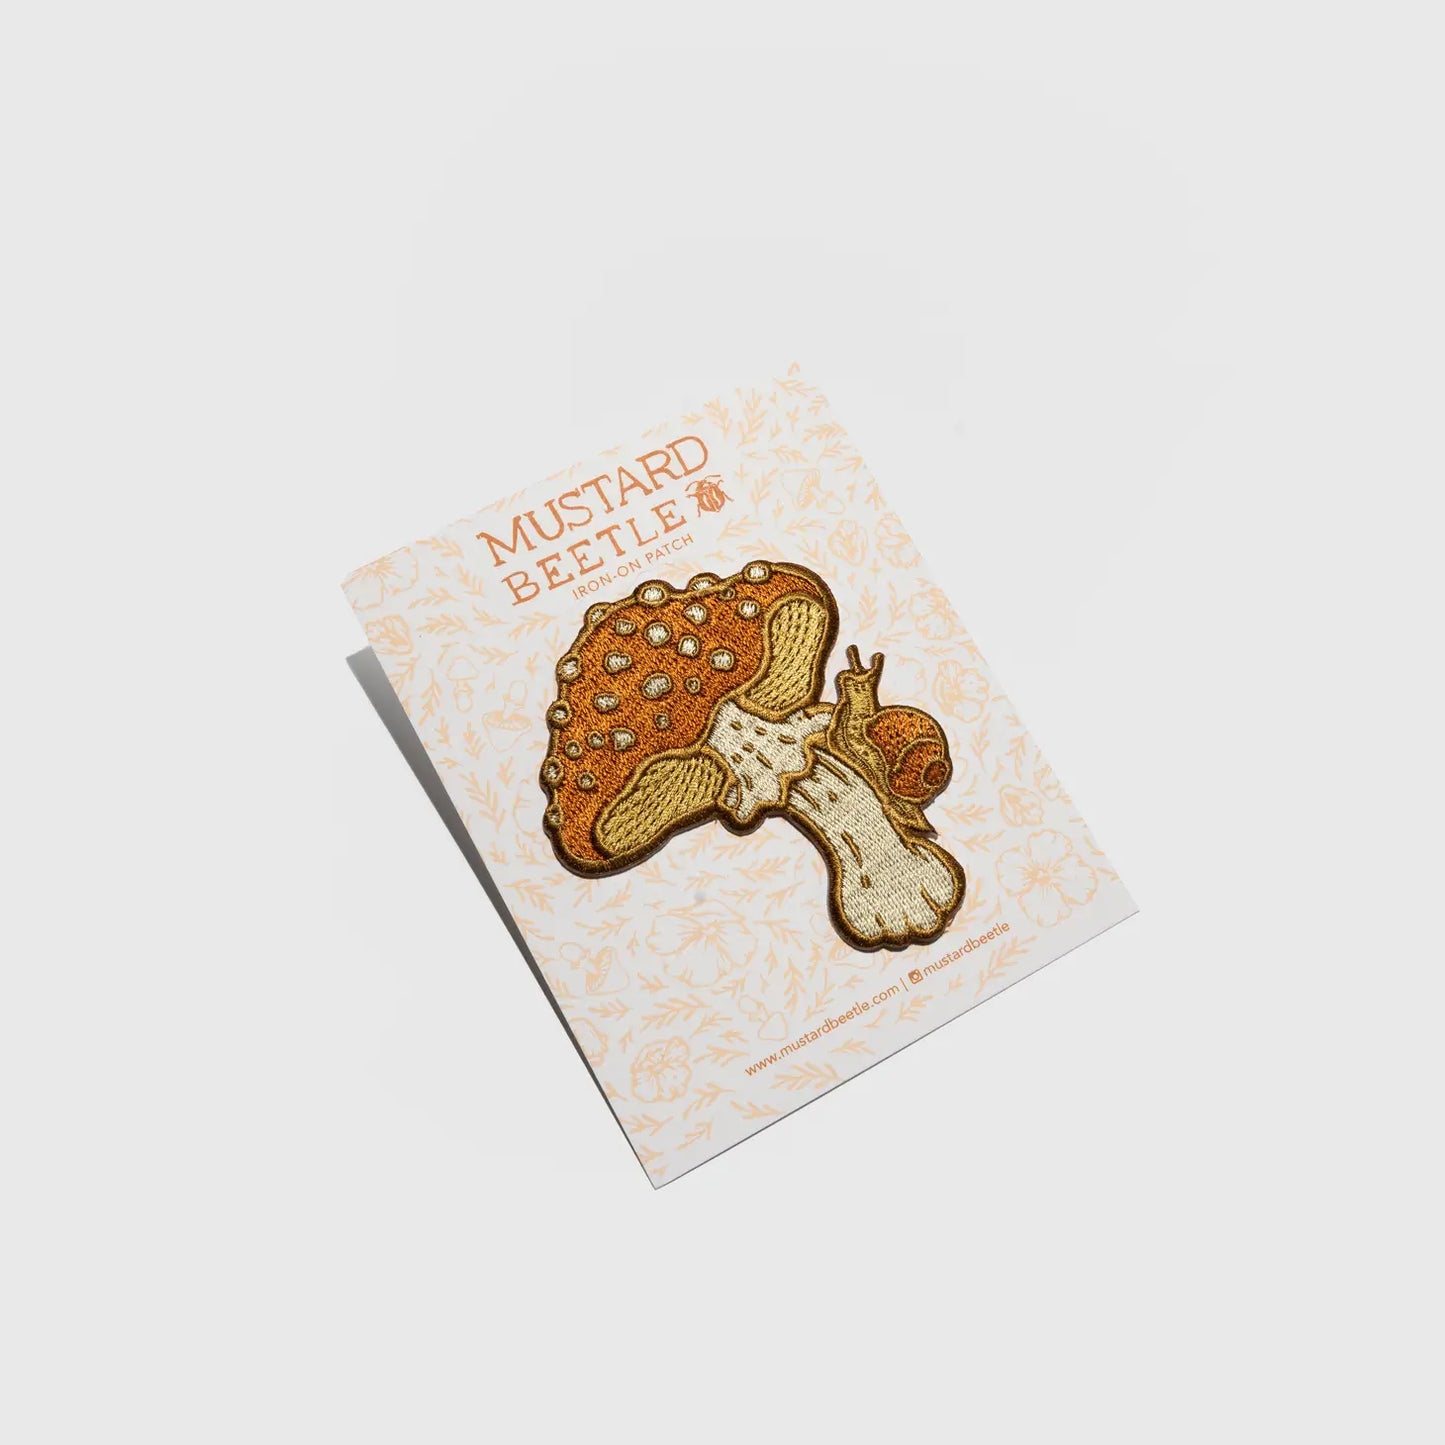 Mushroom & Snail Iron On Patch by Mustard Beetle